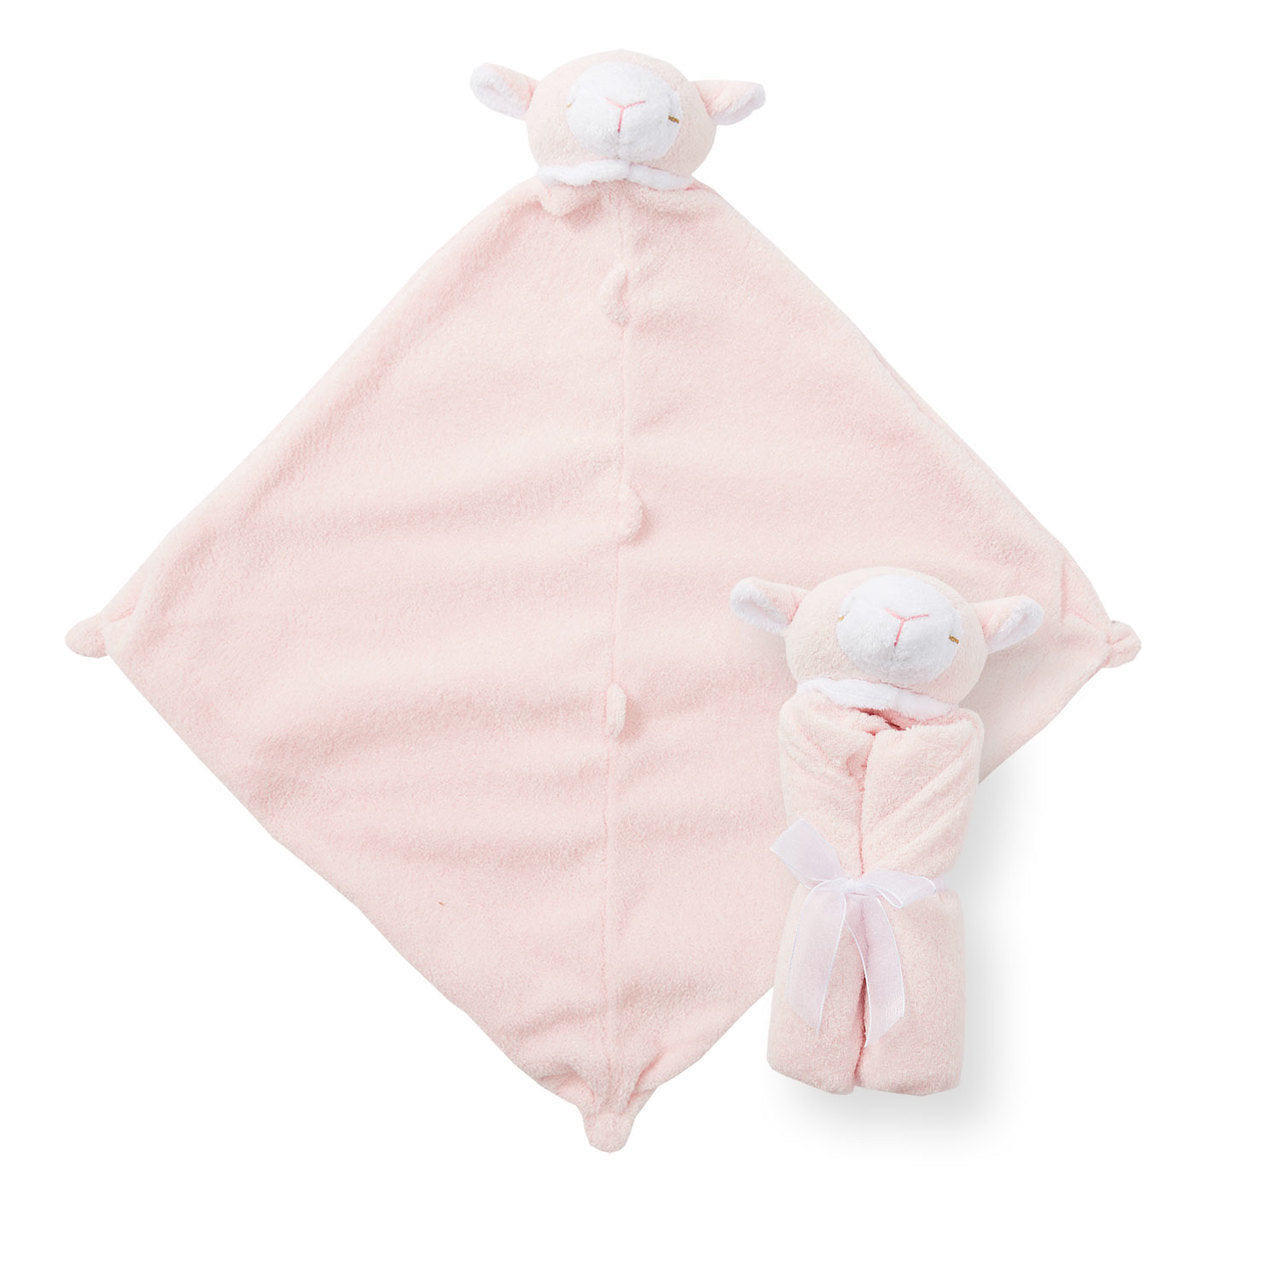 Cuddle Twins - Lamb Pink - Angel Dear